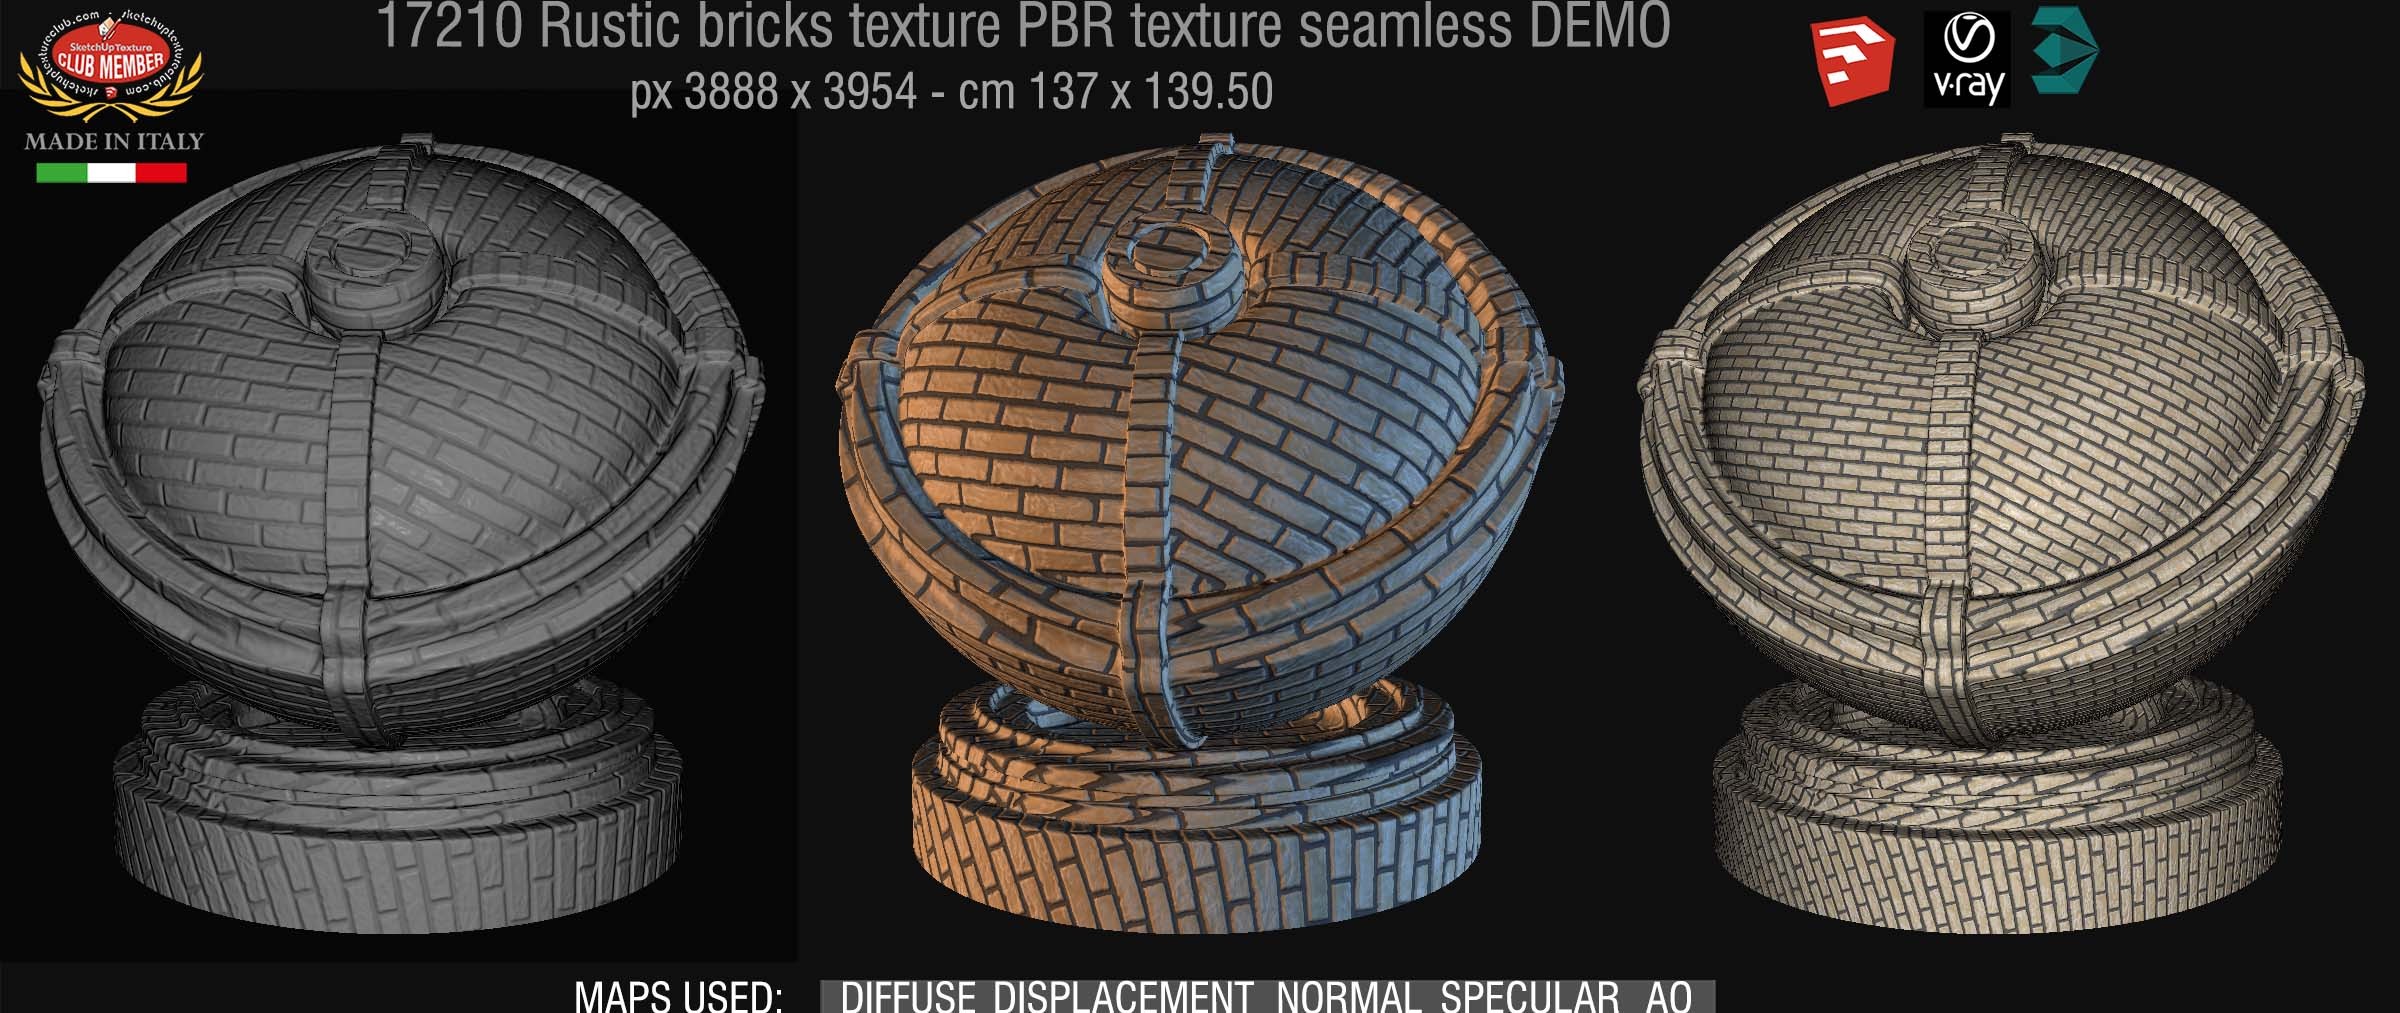 17210 Rustic bricks PBR texture seamless DEMO